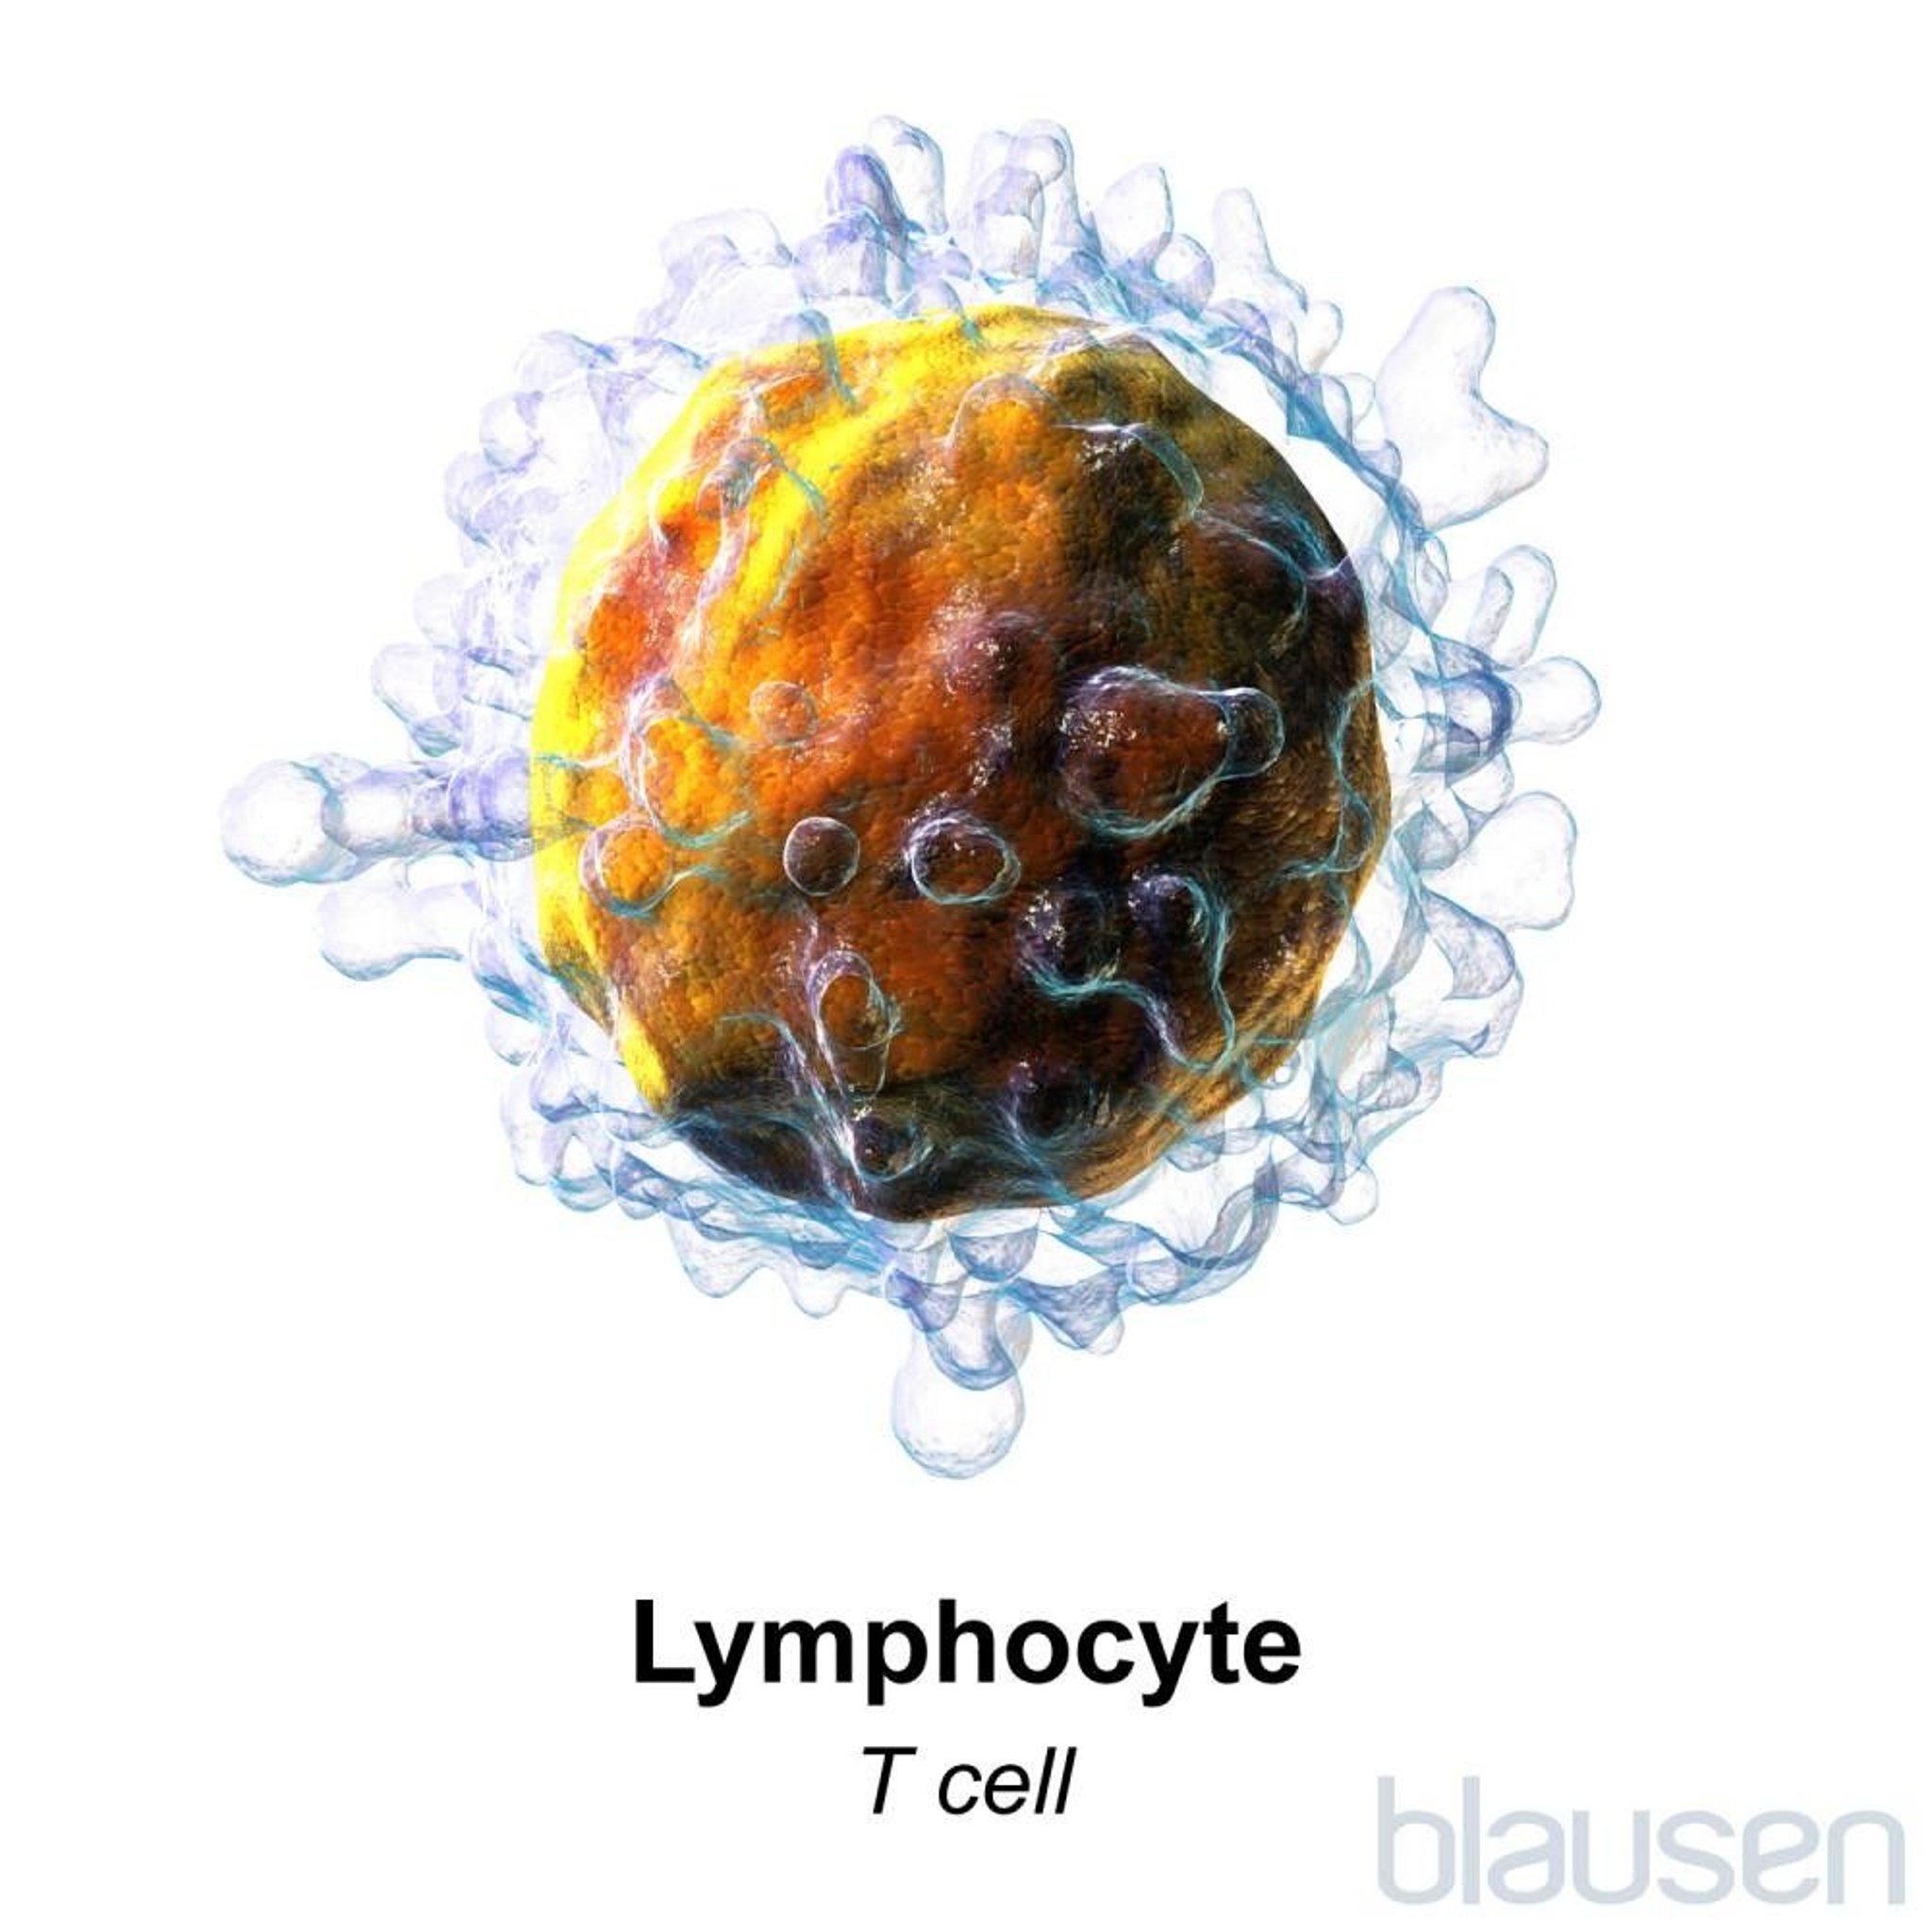 Lymphocyte: T Cell